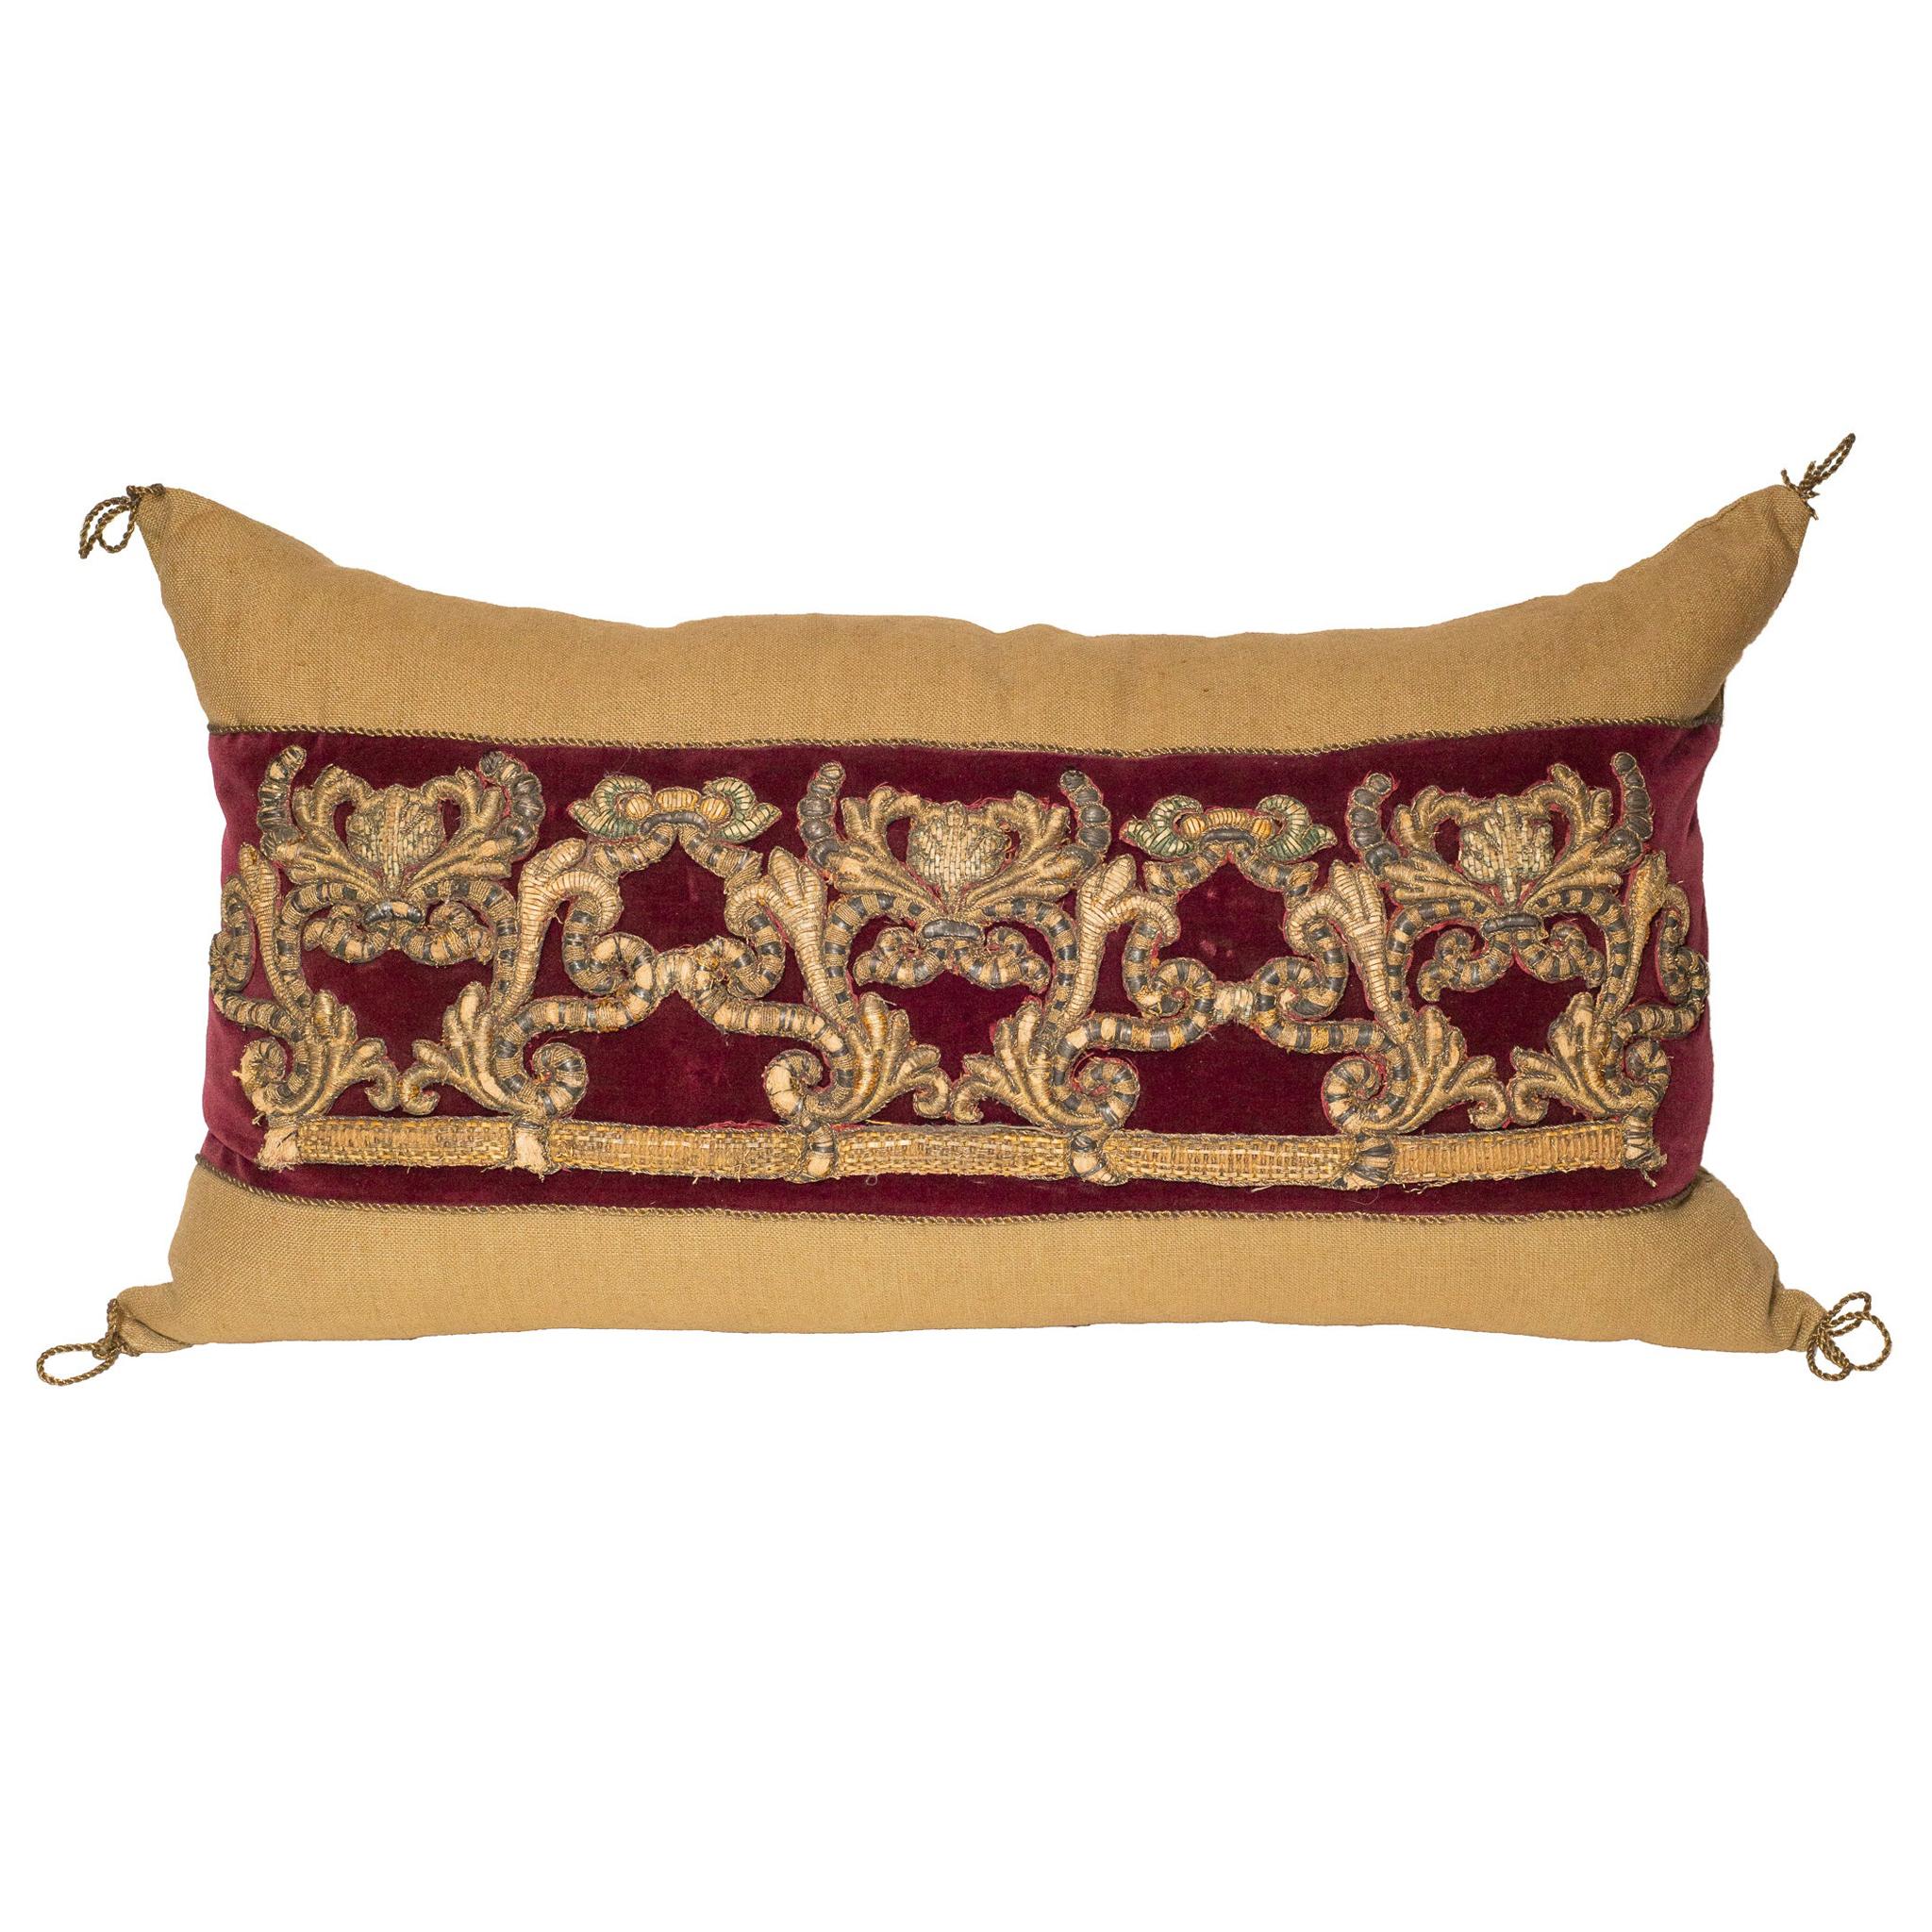 Large Beige Linen Pillow with Burgundy Velvet & Antique Metallic Embroidery